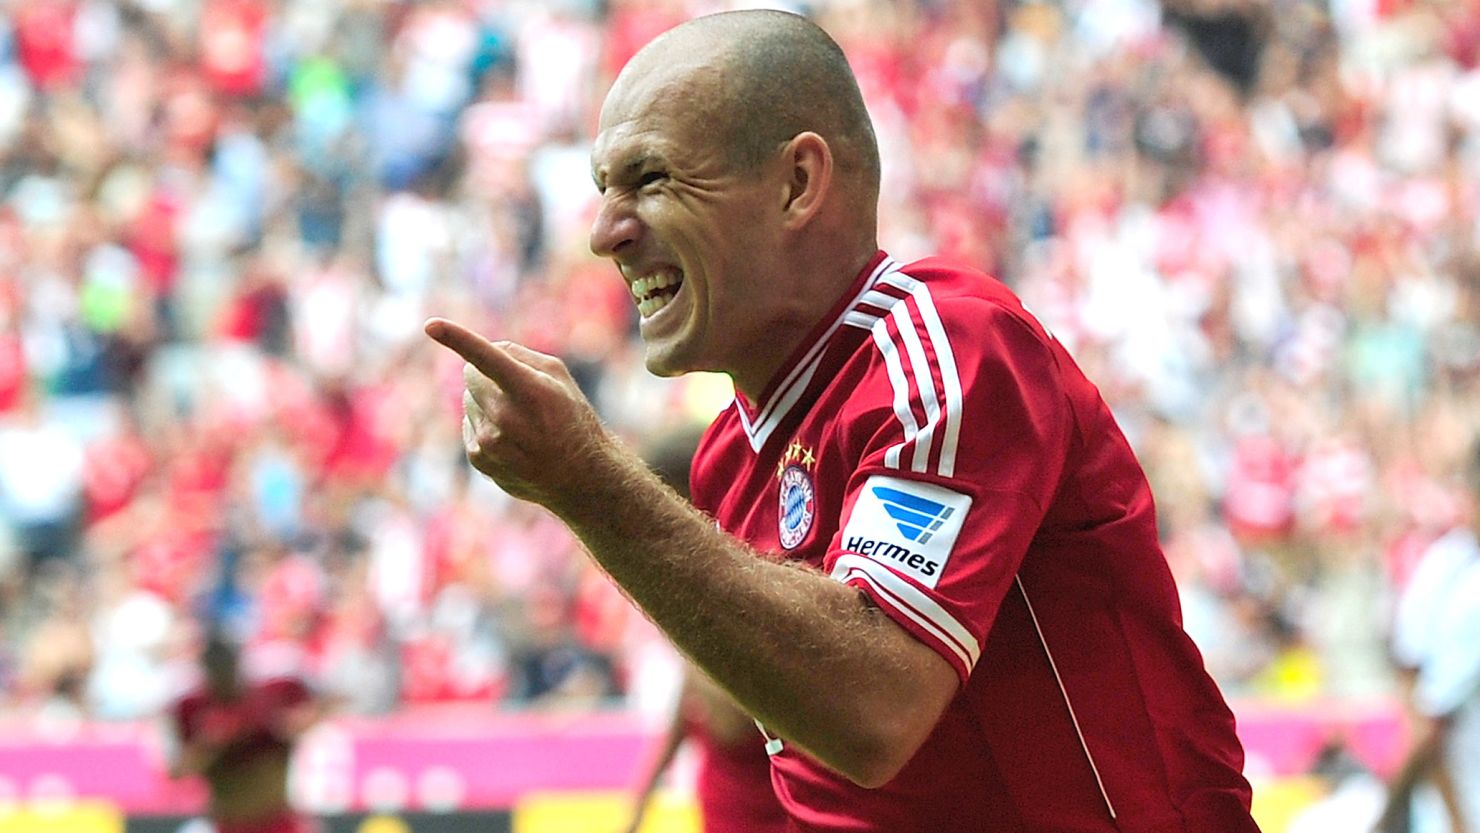 Arjen Robben, who scored in last season's Champions League final, celebrates his goal against Nuremberg.